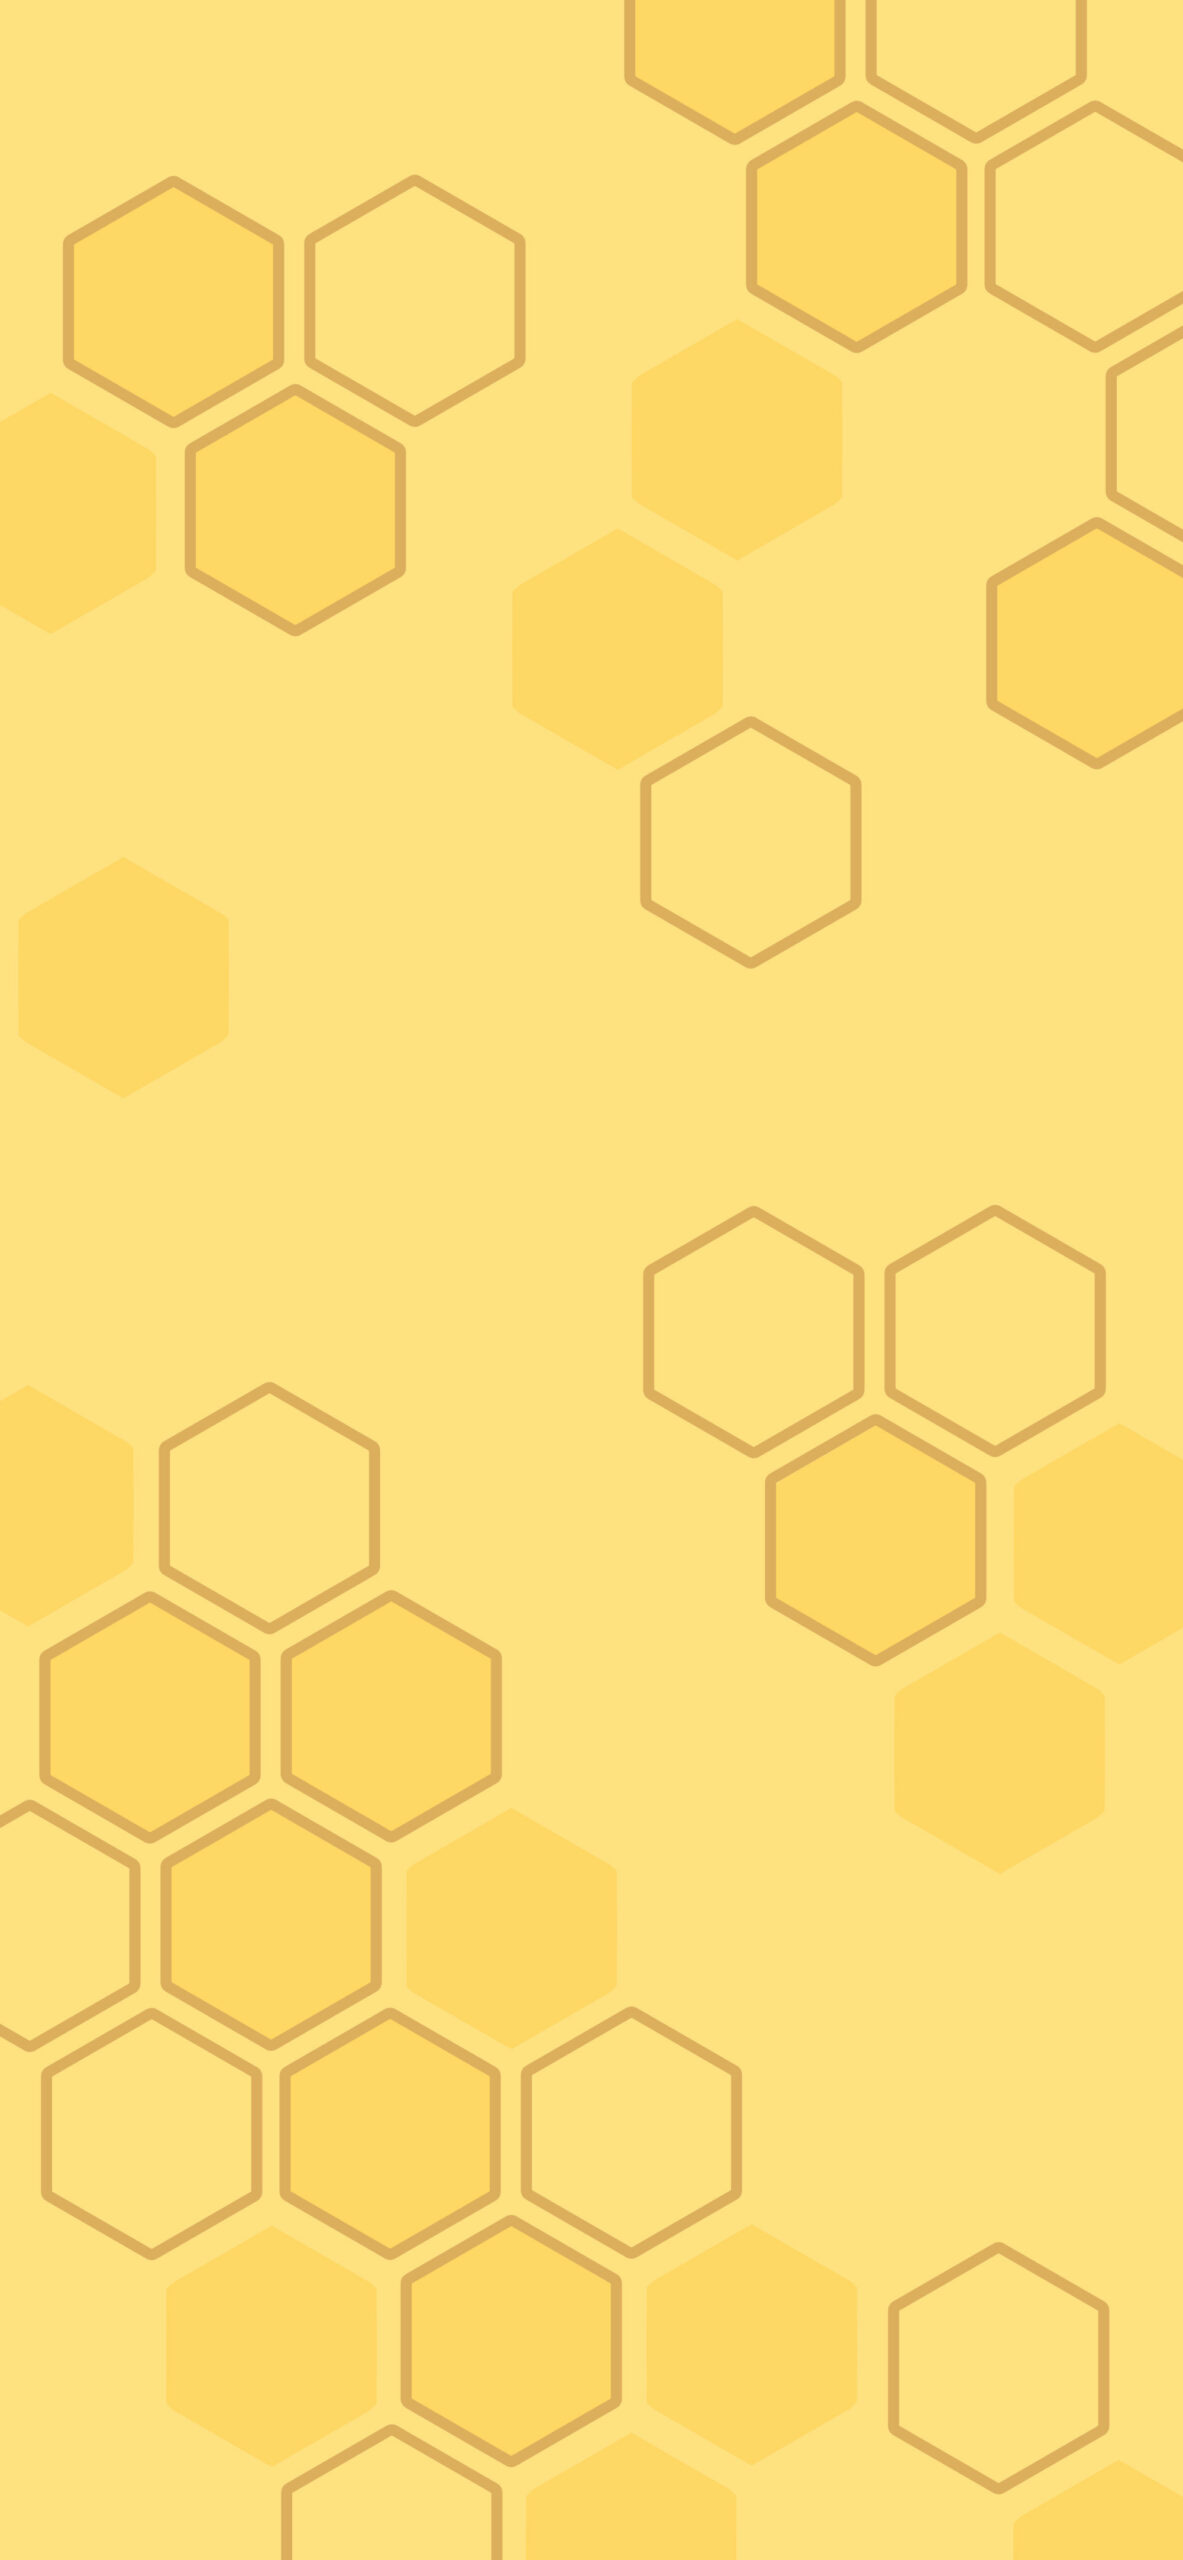 bees honeycomb yellow background